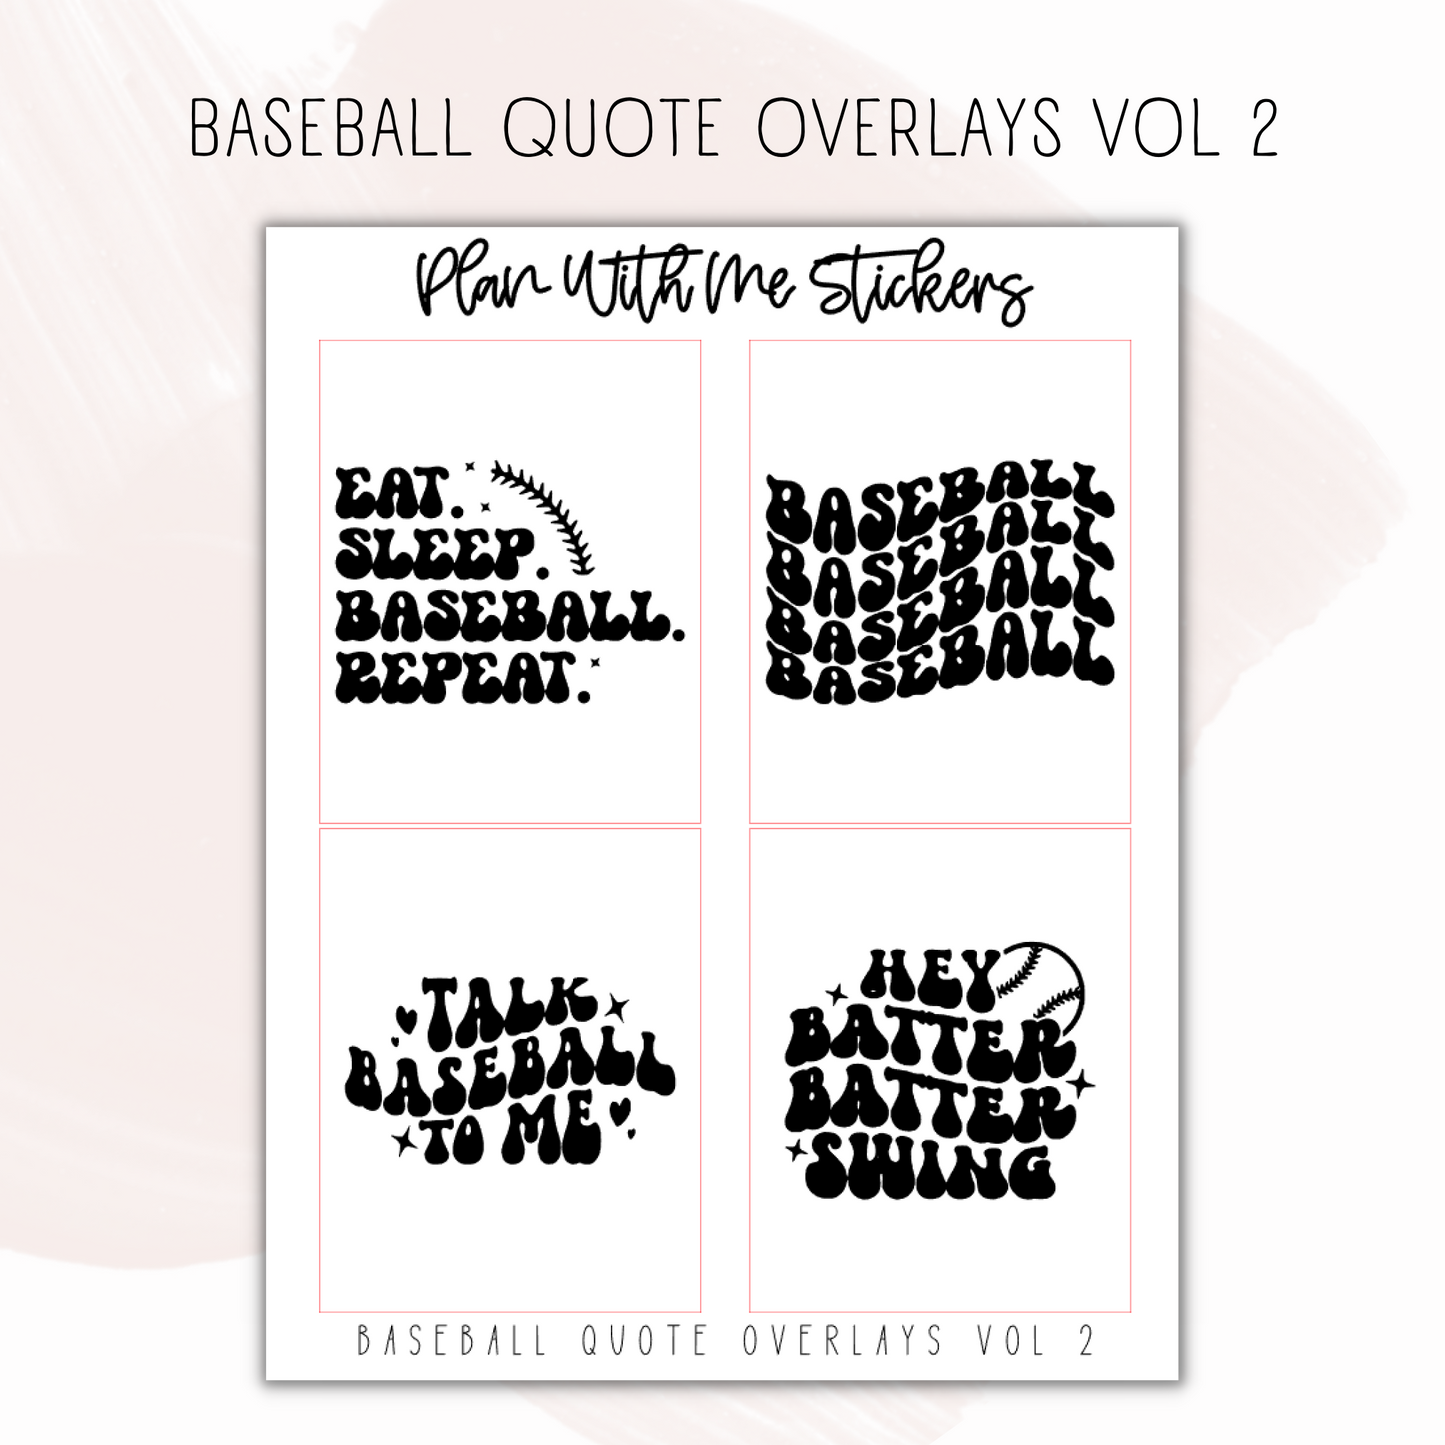 Baseball Quote Overlays Vol 2